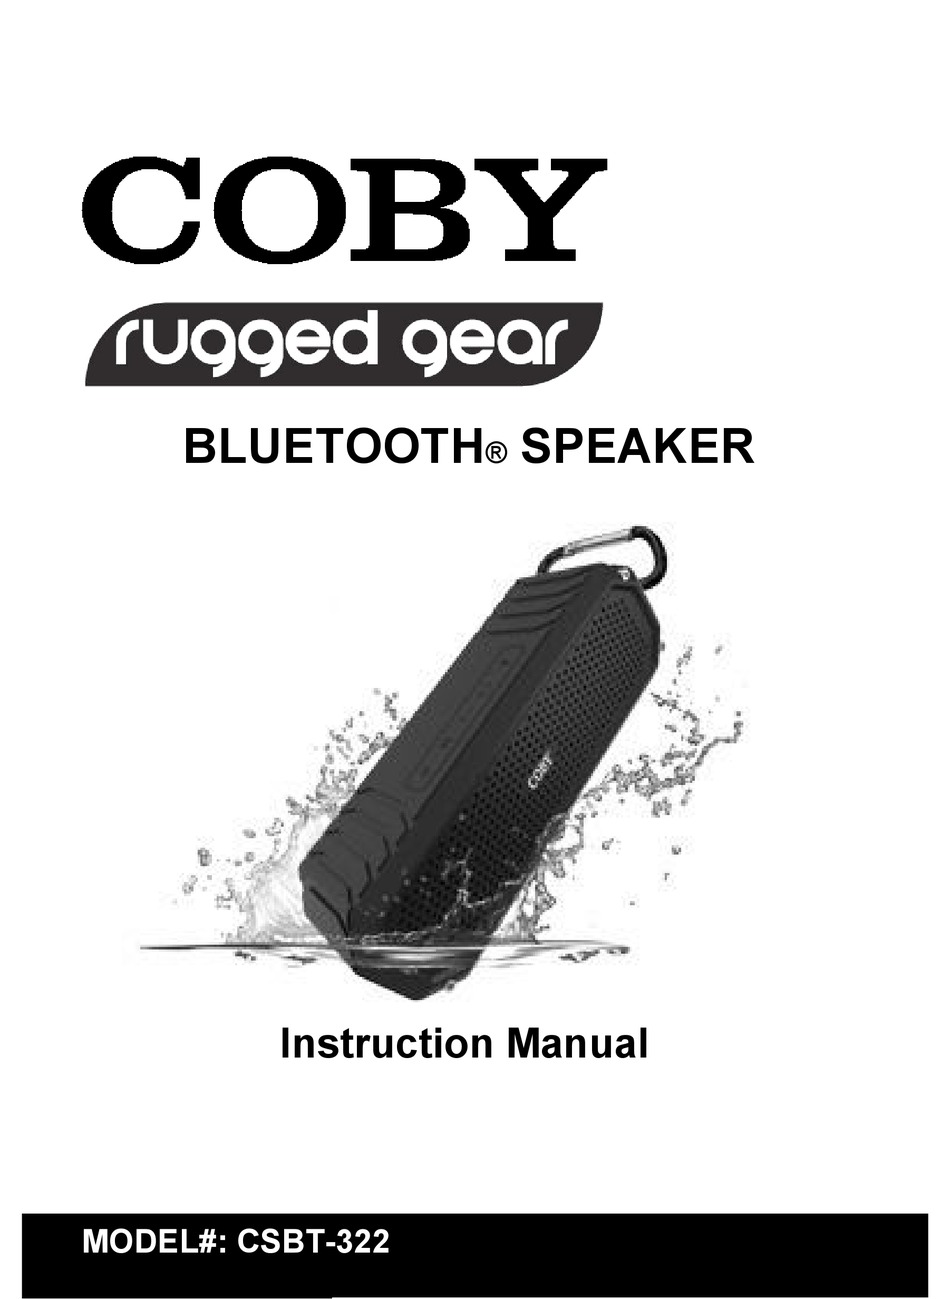 COBY CSBT-322 INSTRUCTION MANUAL Pdf Download | ManualsLib